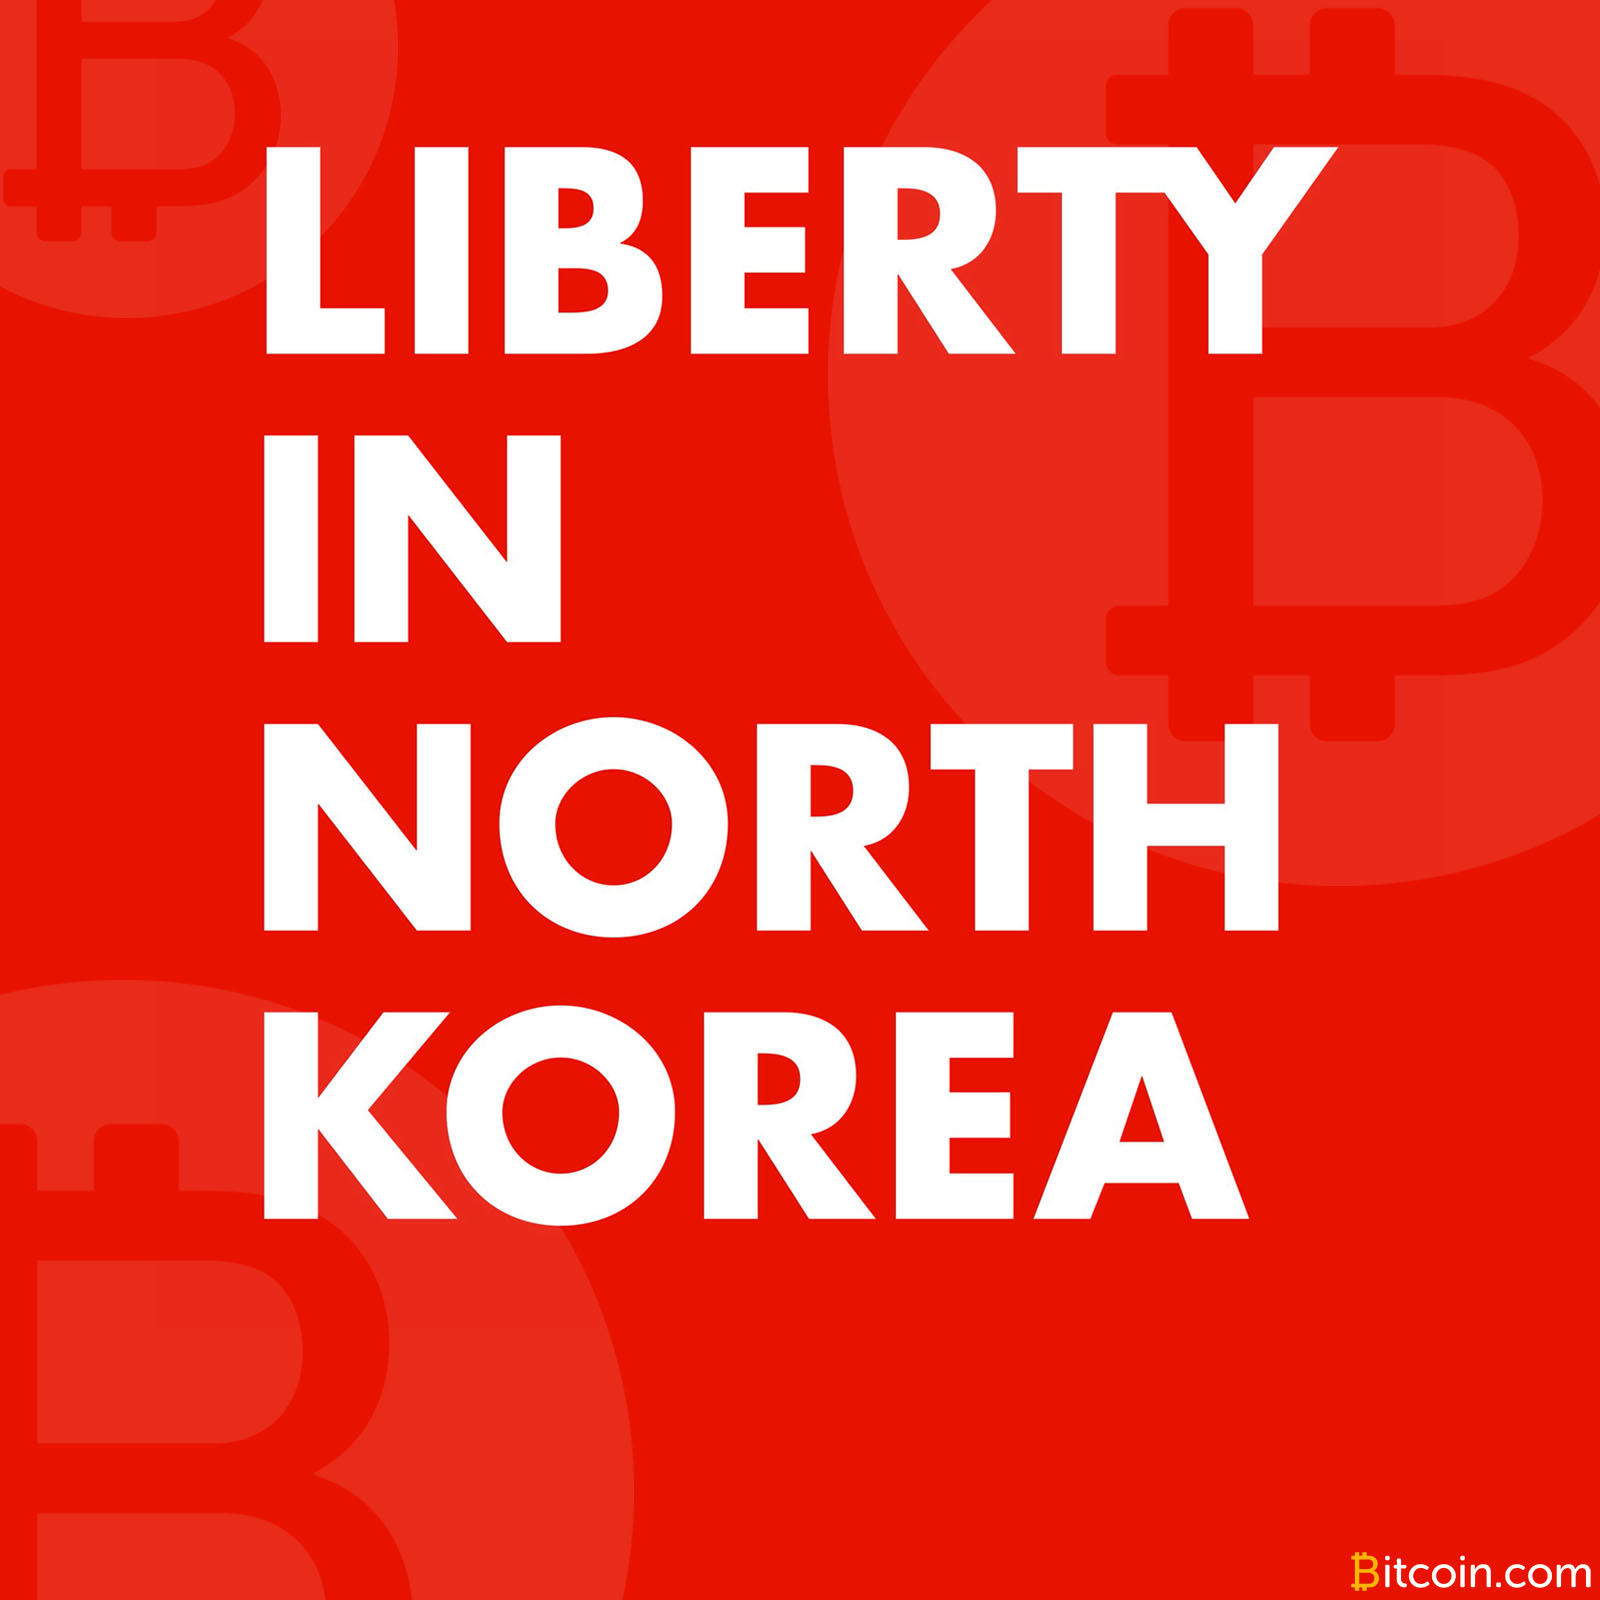 Liberty in North Korea: Bitcoin.com, /r/GoldAndBlack Team Up for Worthy Cause